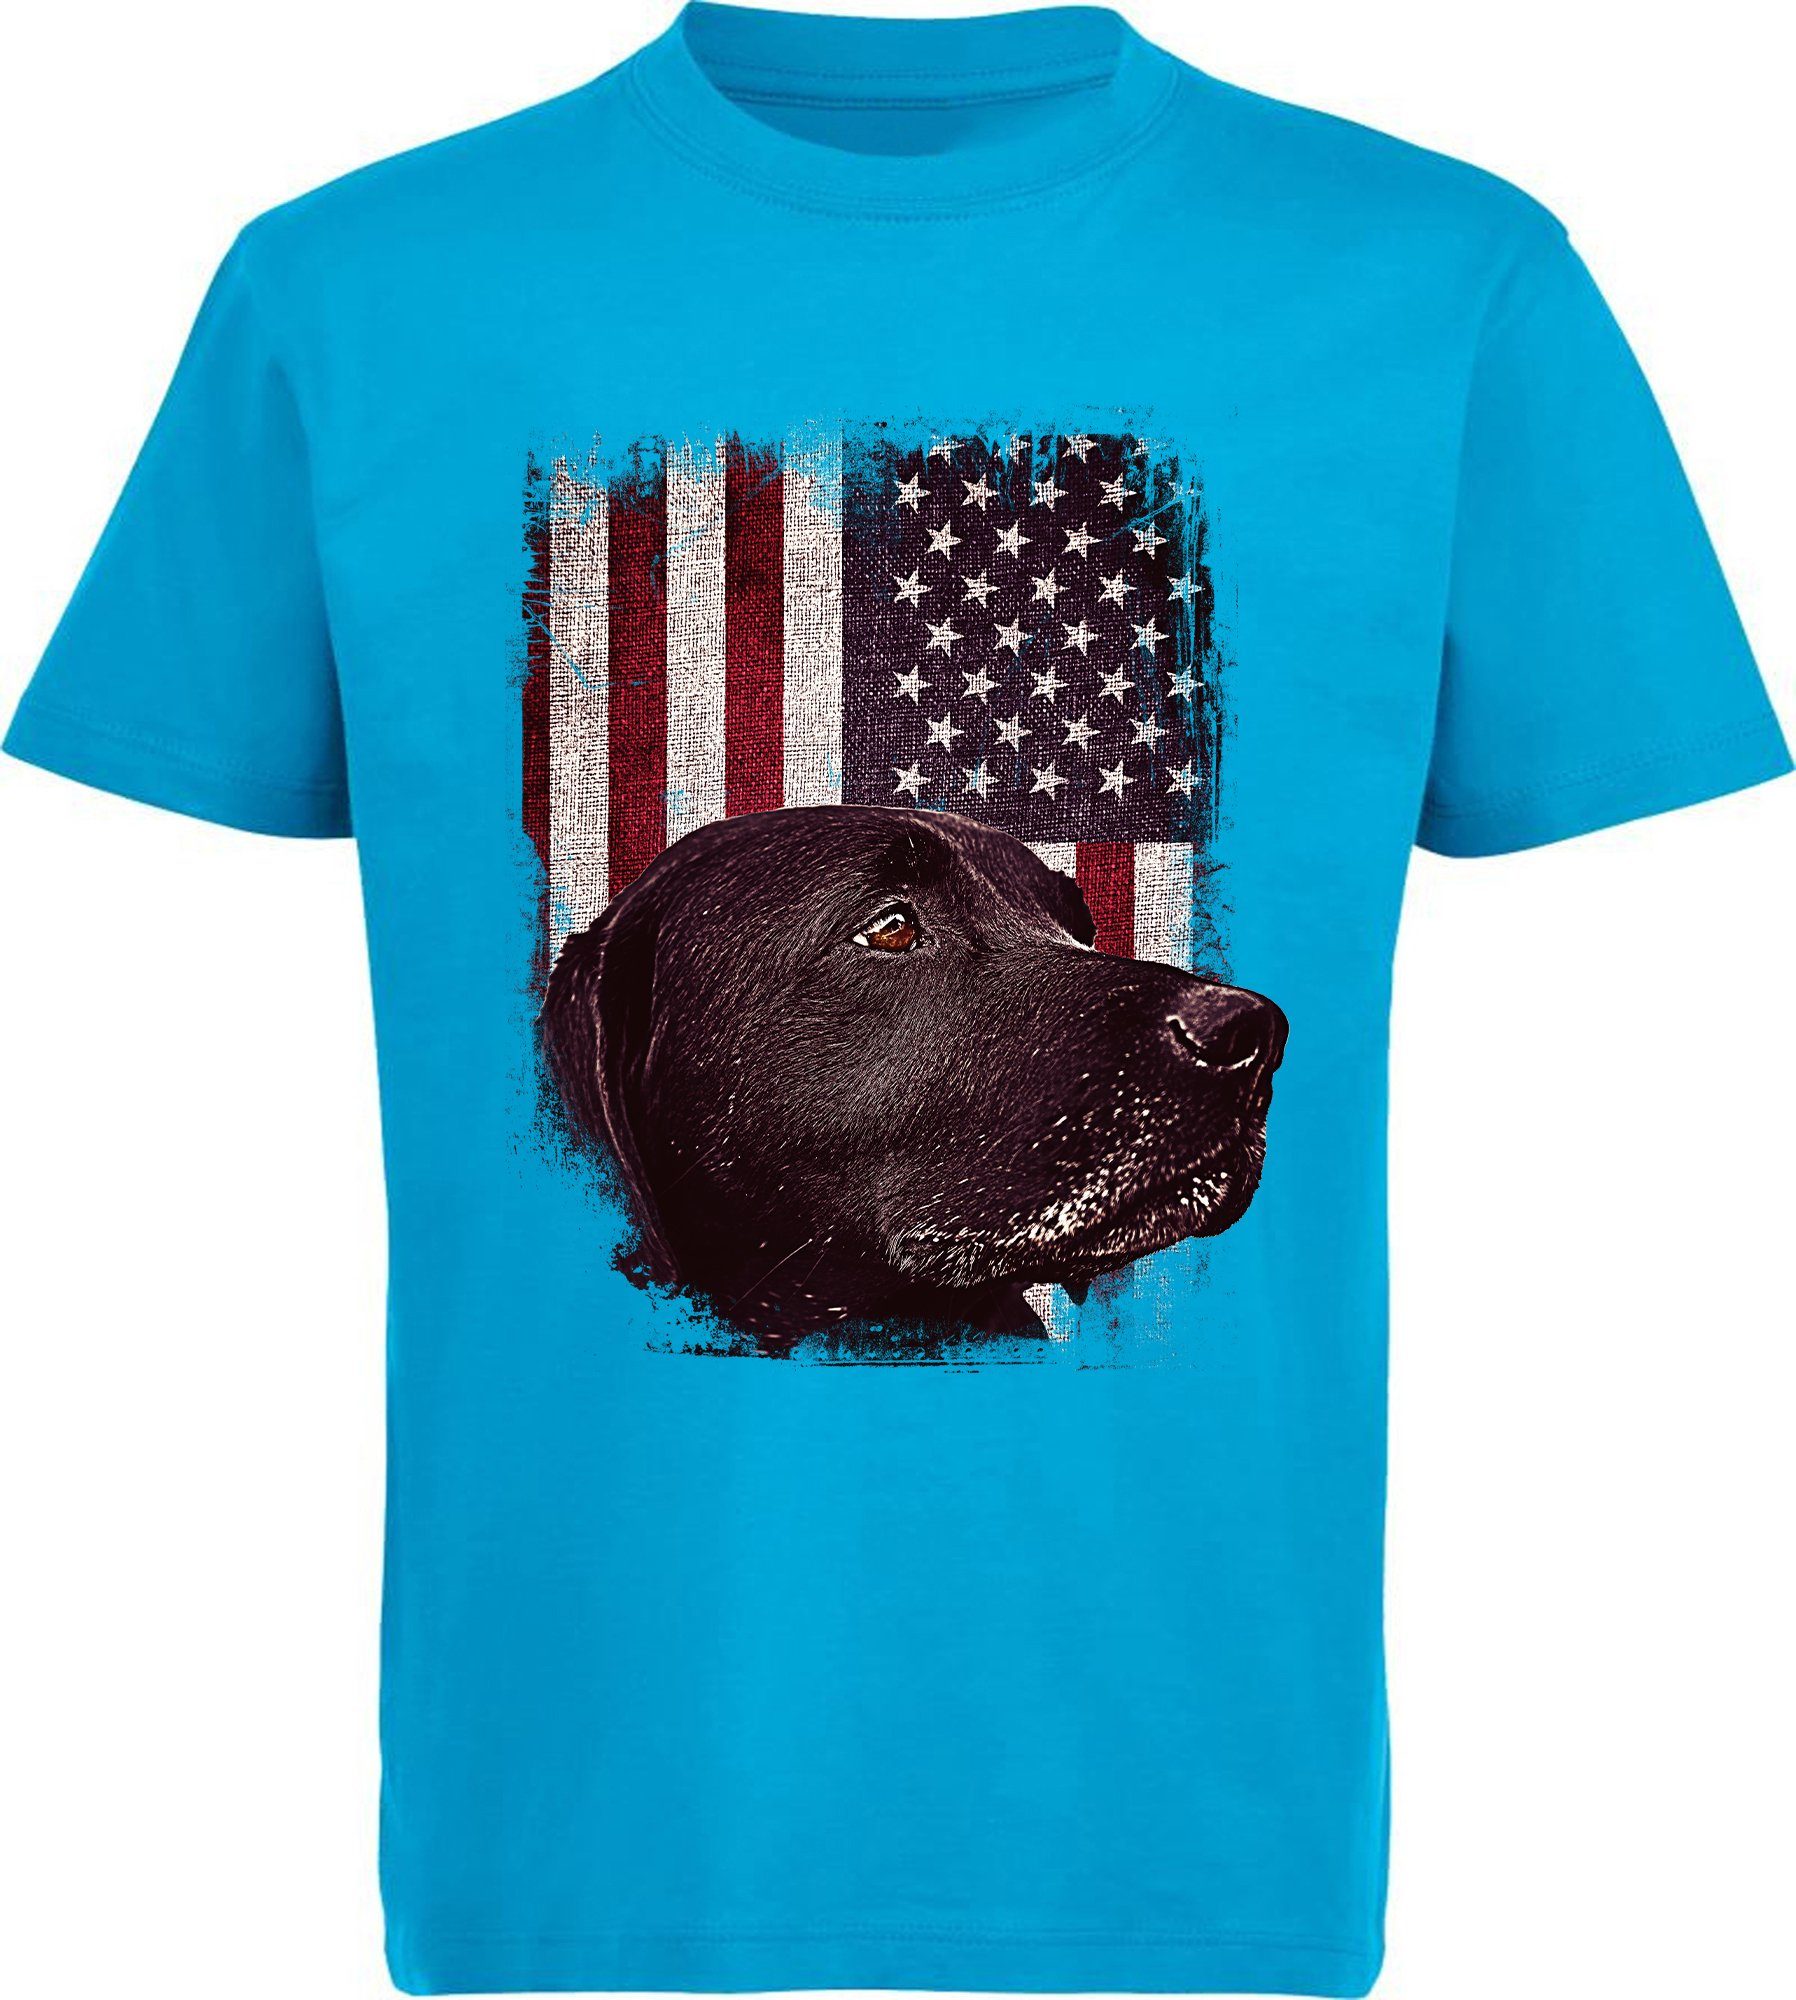 USA i246 Baumwollshirt Hunde aqua schwarzer Flagge bedruckt mit Aufdruck, Labrador Kinder MyDesign24 Print - Shirt T-Shirt blau vor